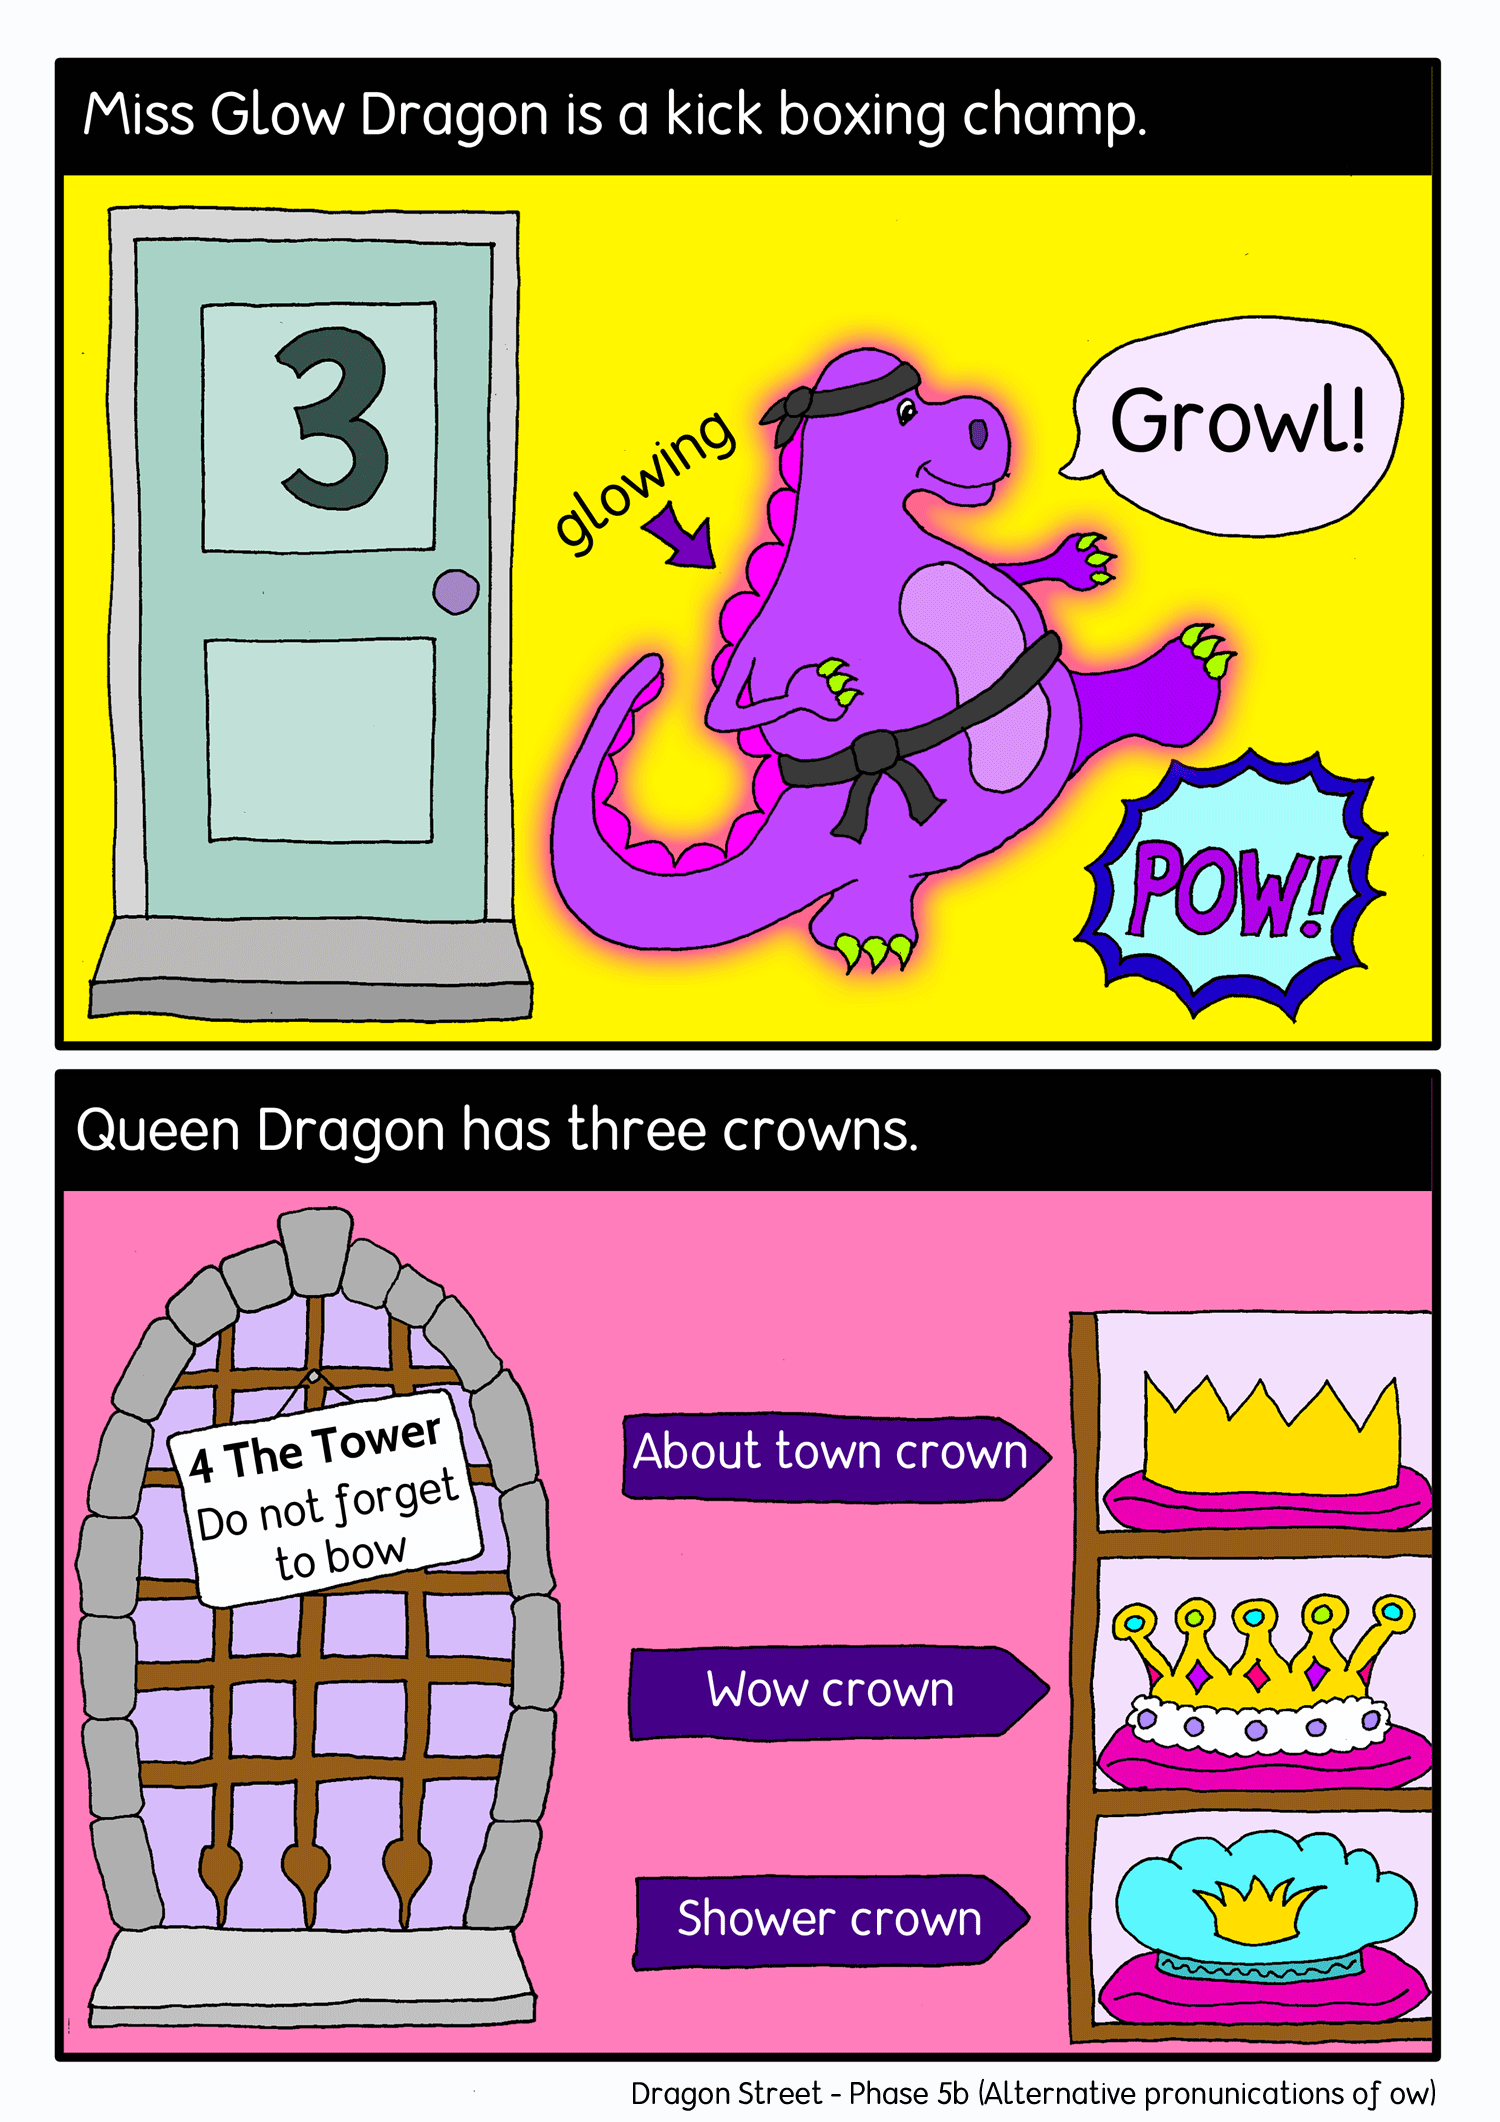 Dragon street comic panel2